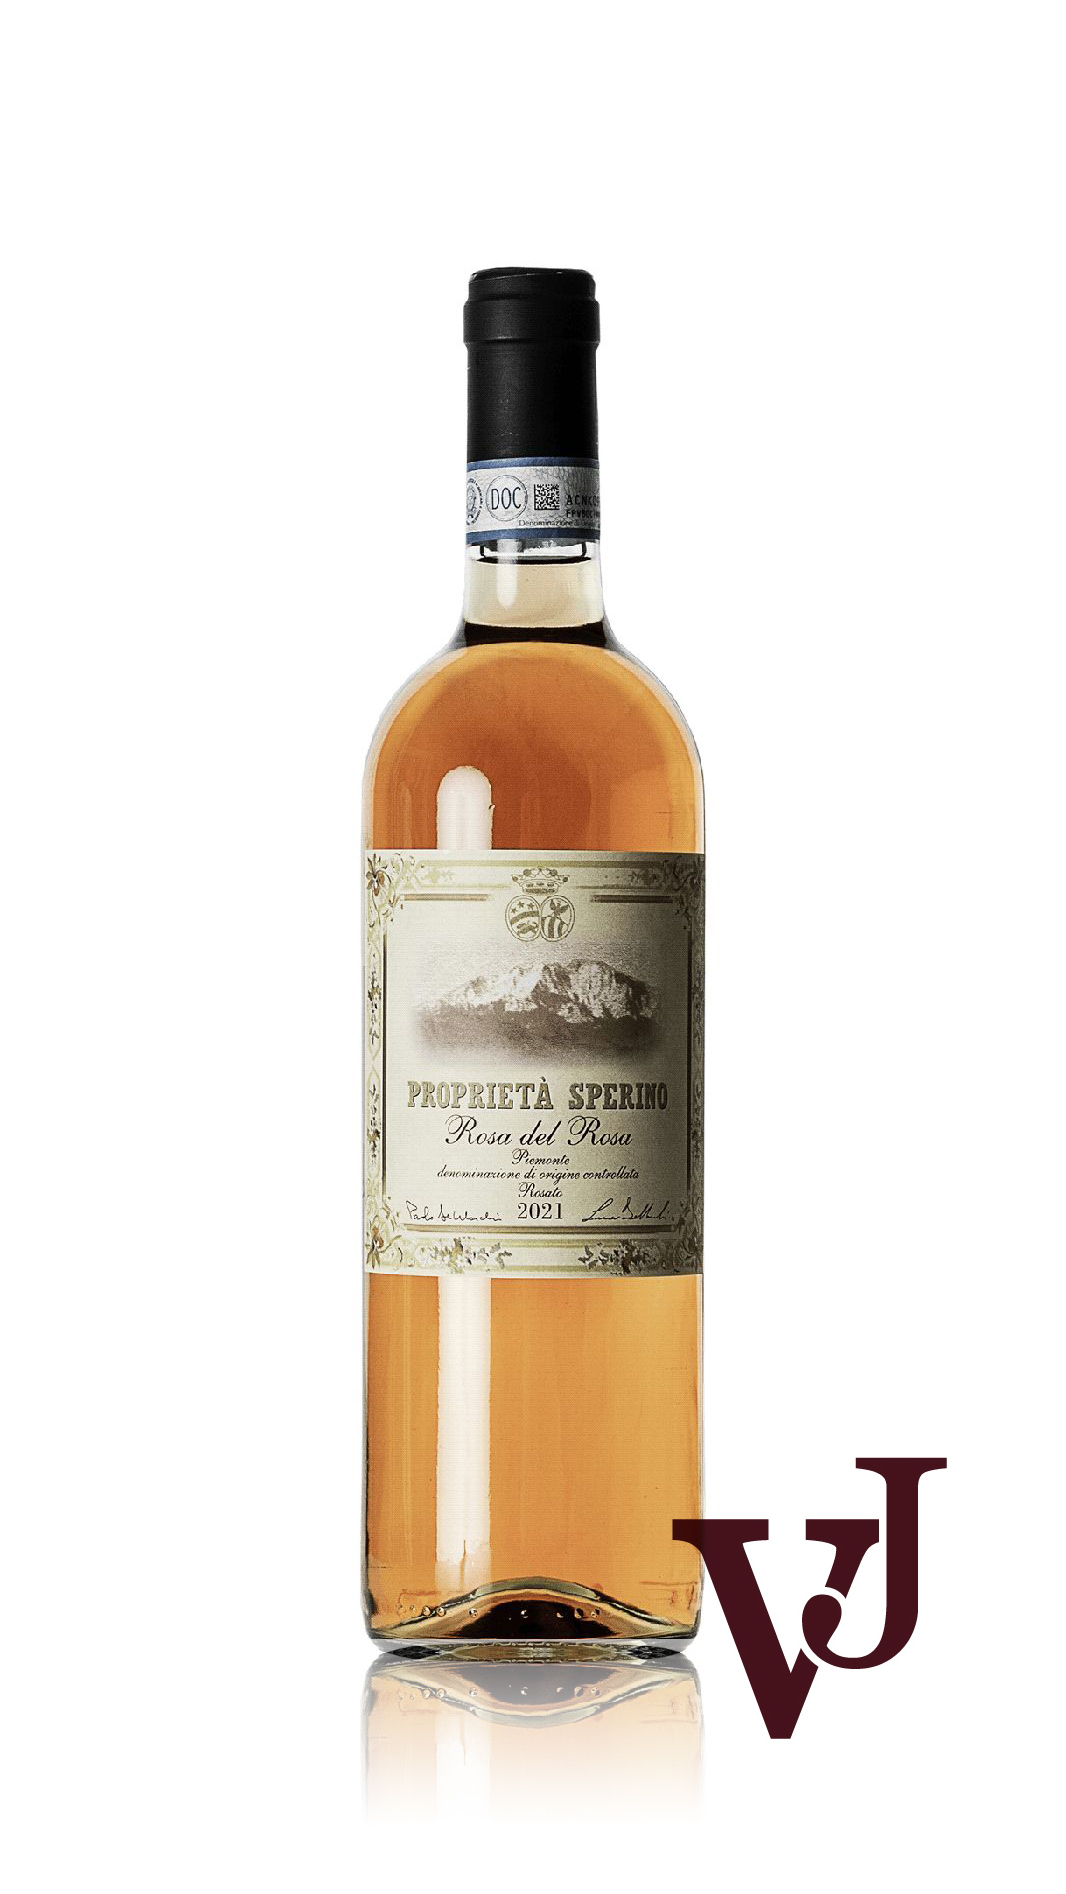 Rosé Vin - Proprietà Sperino artikel nummer 5774701 från producenten Proprietà Sperino från området Italien